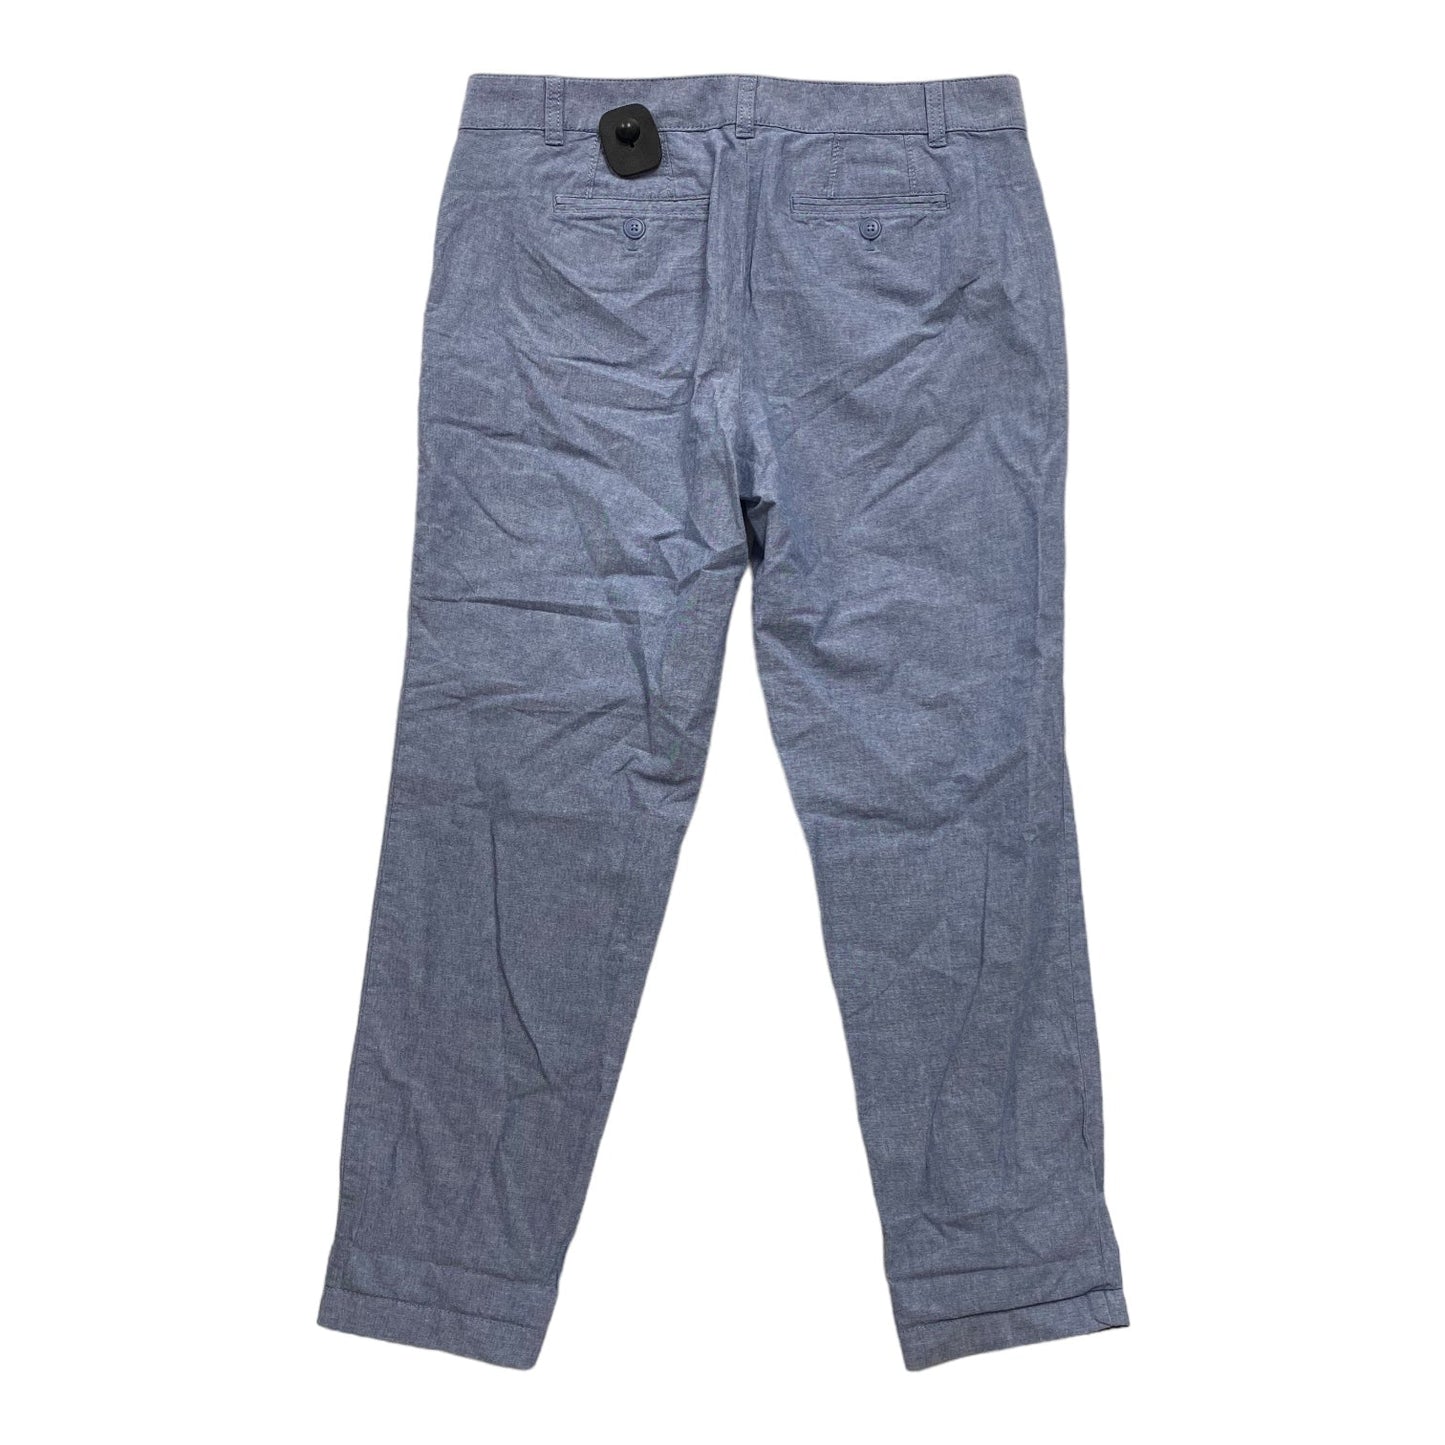 Blue Pants Cropped Talbots, Size 6petite